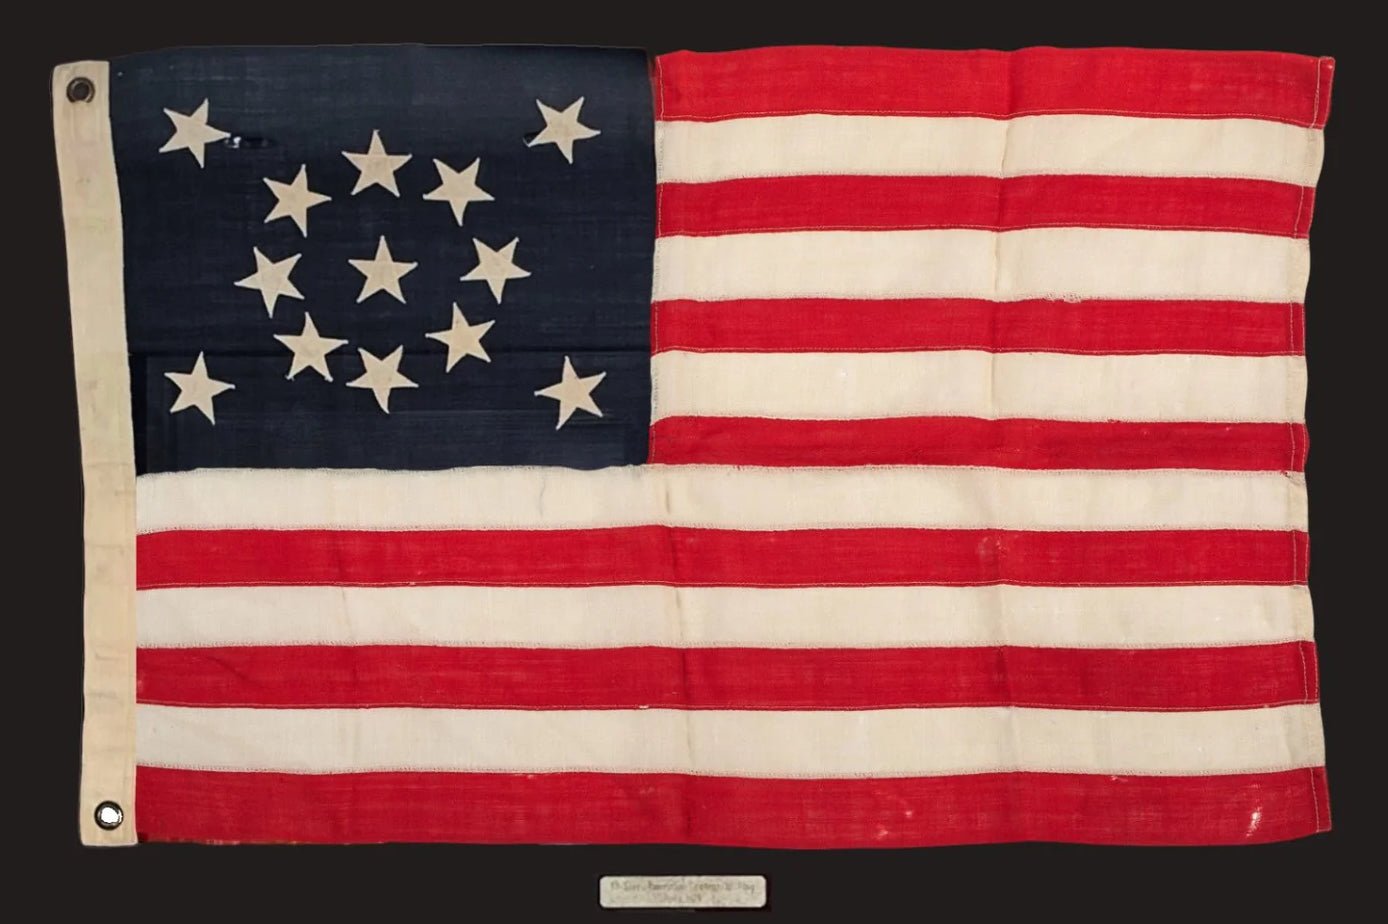 13 - Star American Centennial Flag, circa 1876 - The Great Republic